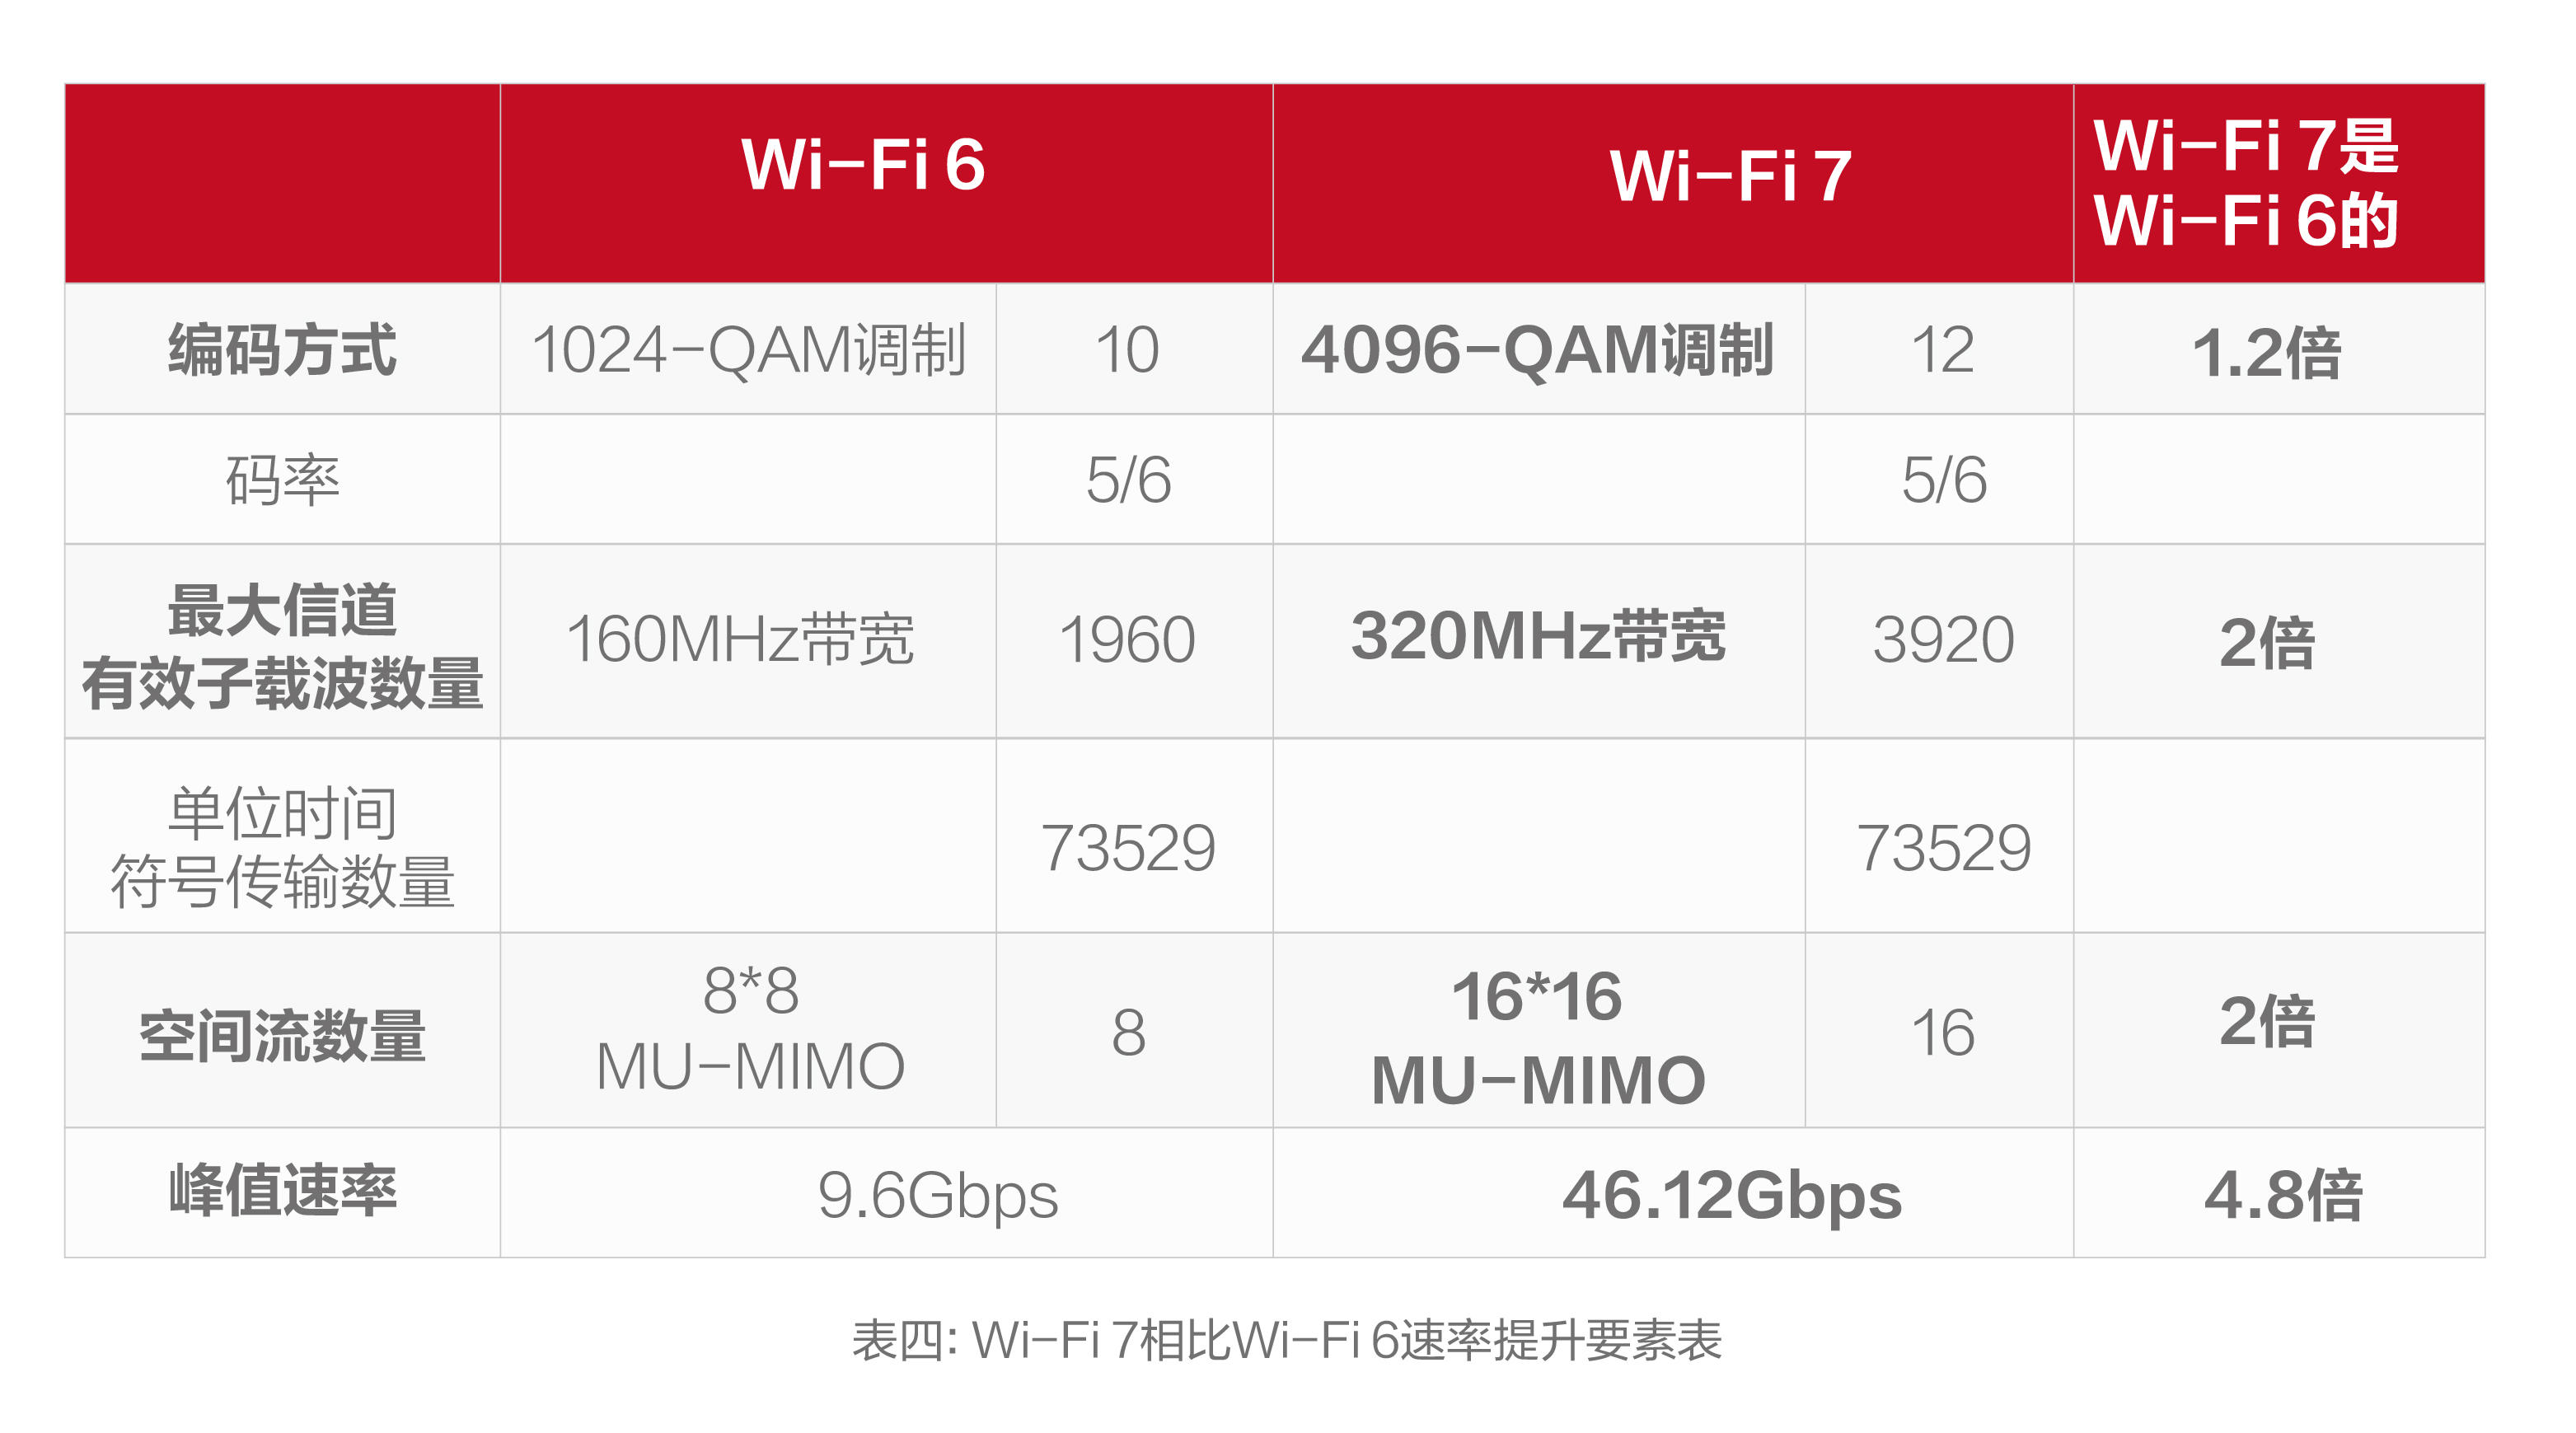 Wi-Fi 7相比Wi-Fi 6速率提升要素表